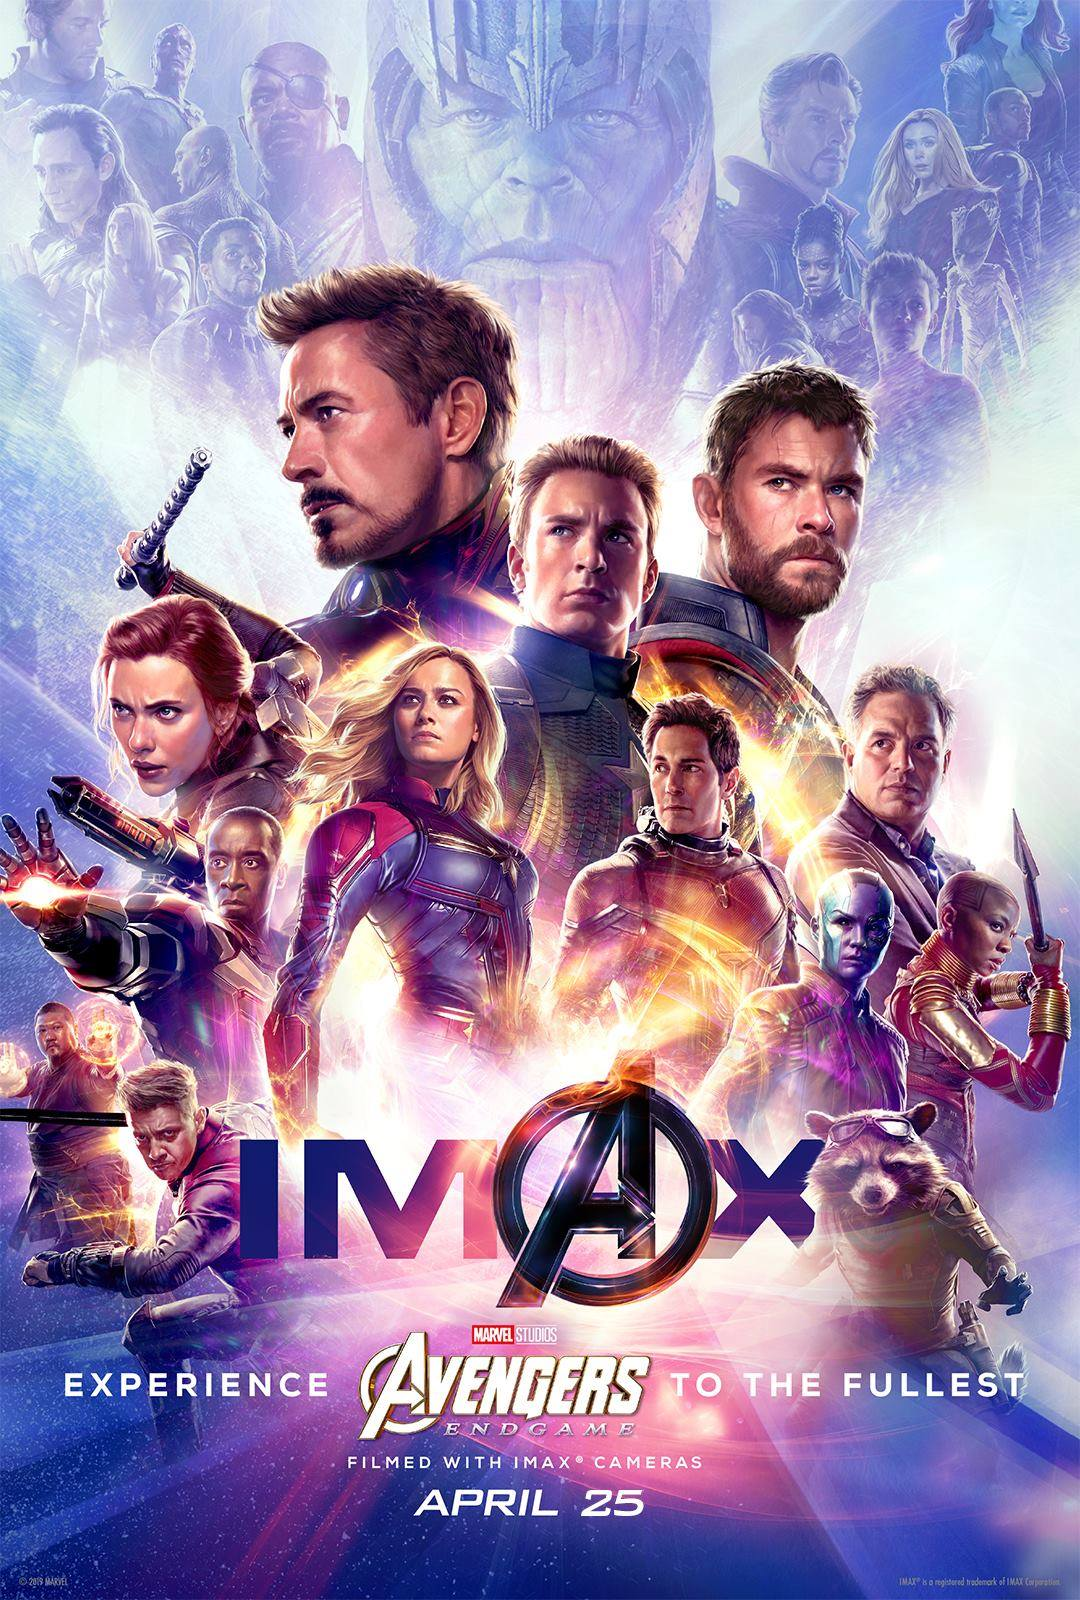 General 1080x1600 Avengers Endgame Marvel Cinematic Universe movie poster movies superhero superheroines Iron Man Captain Marvel Thor Captain America